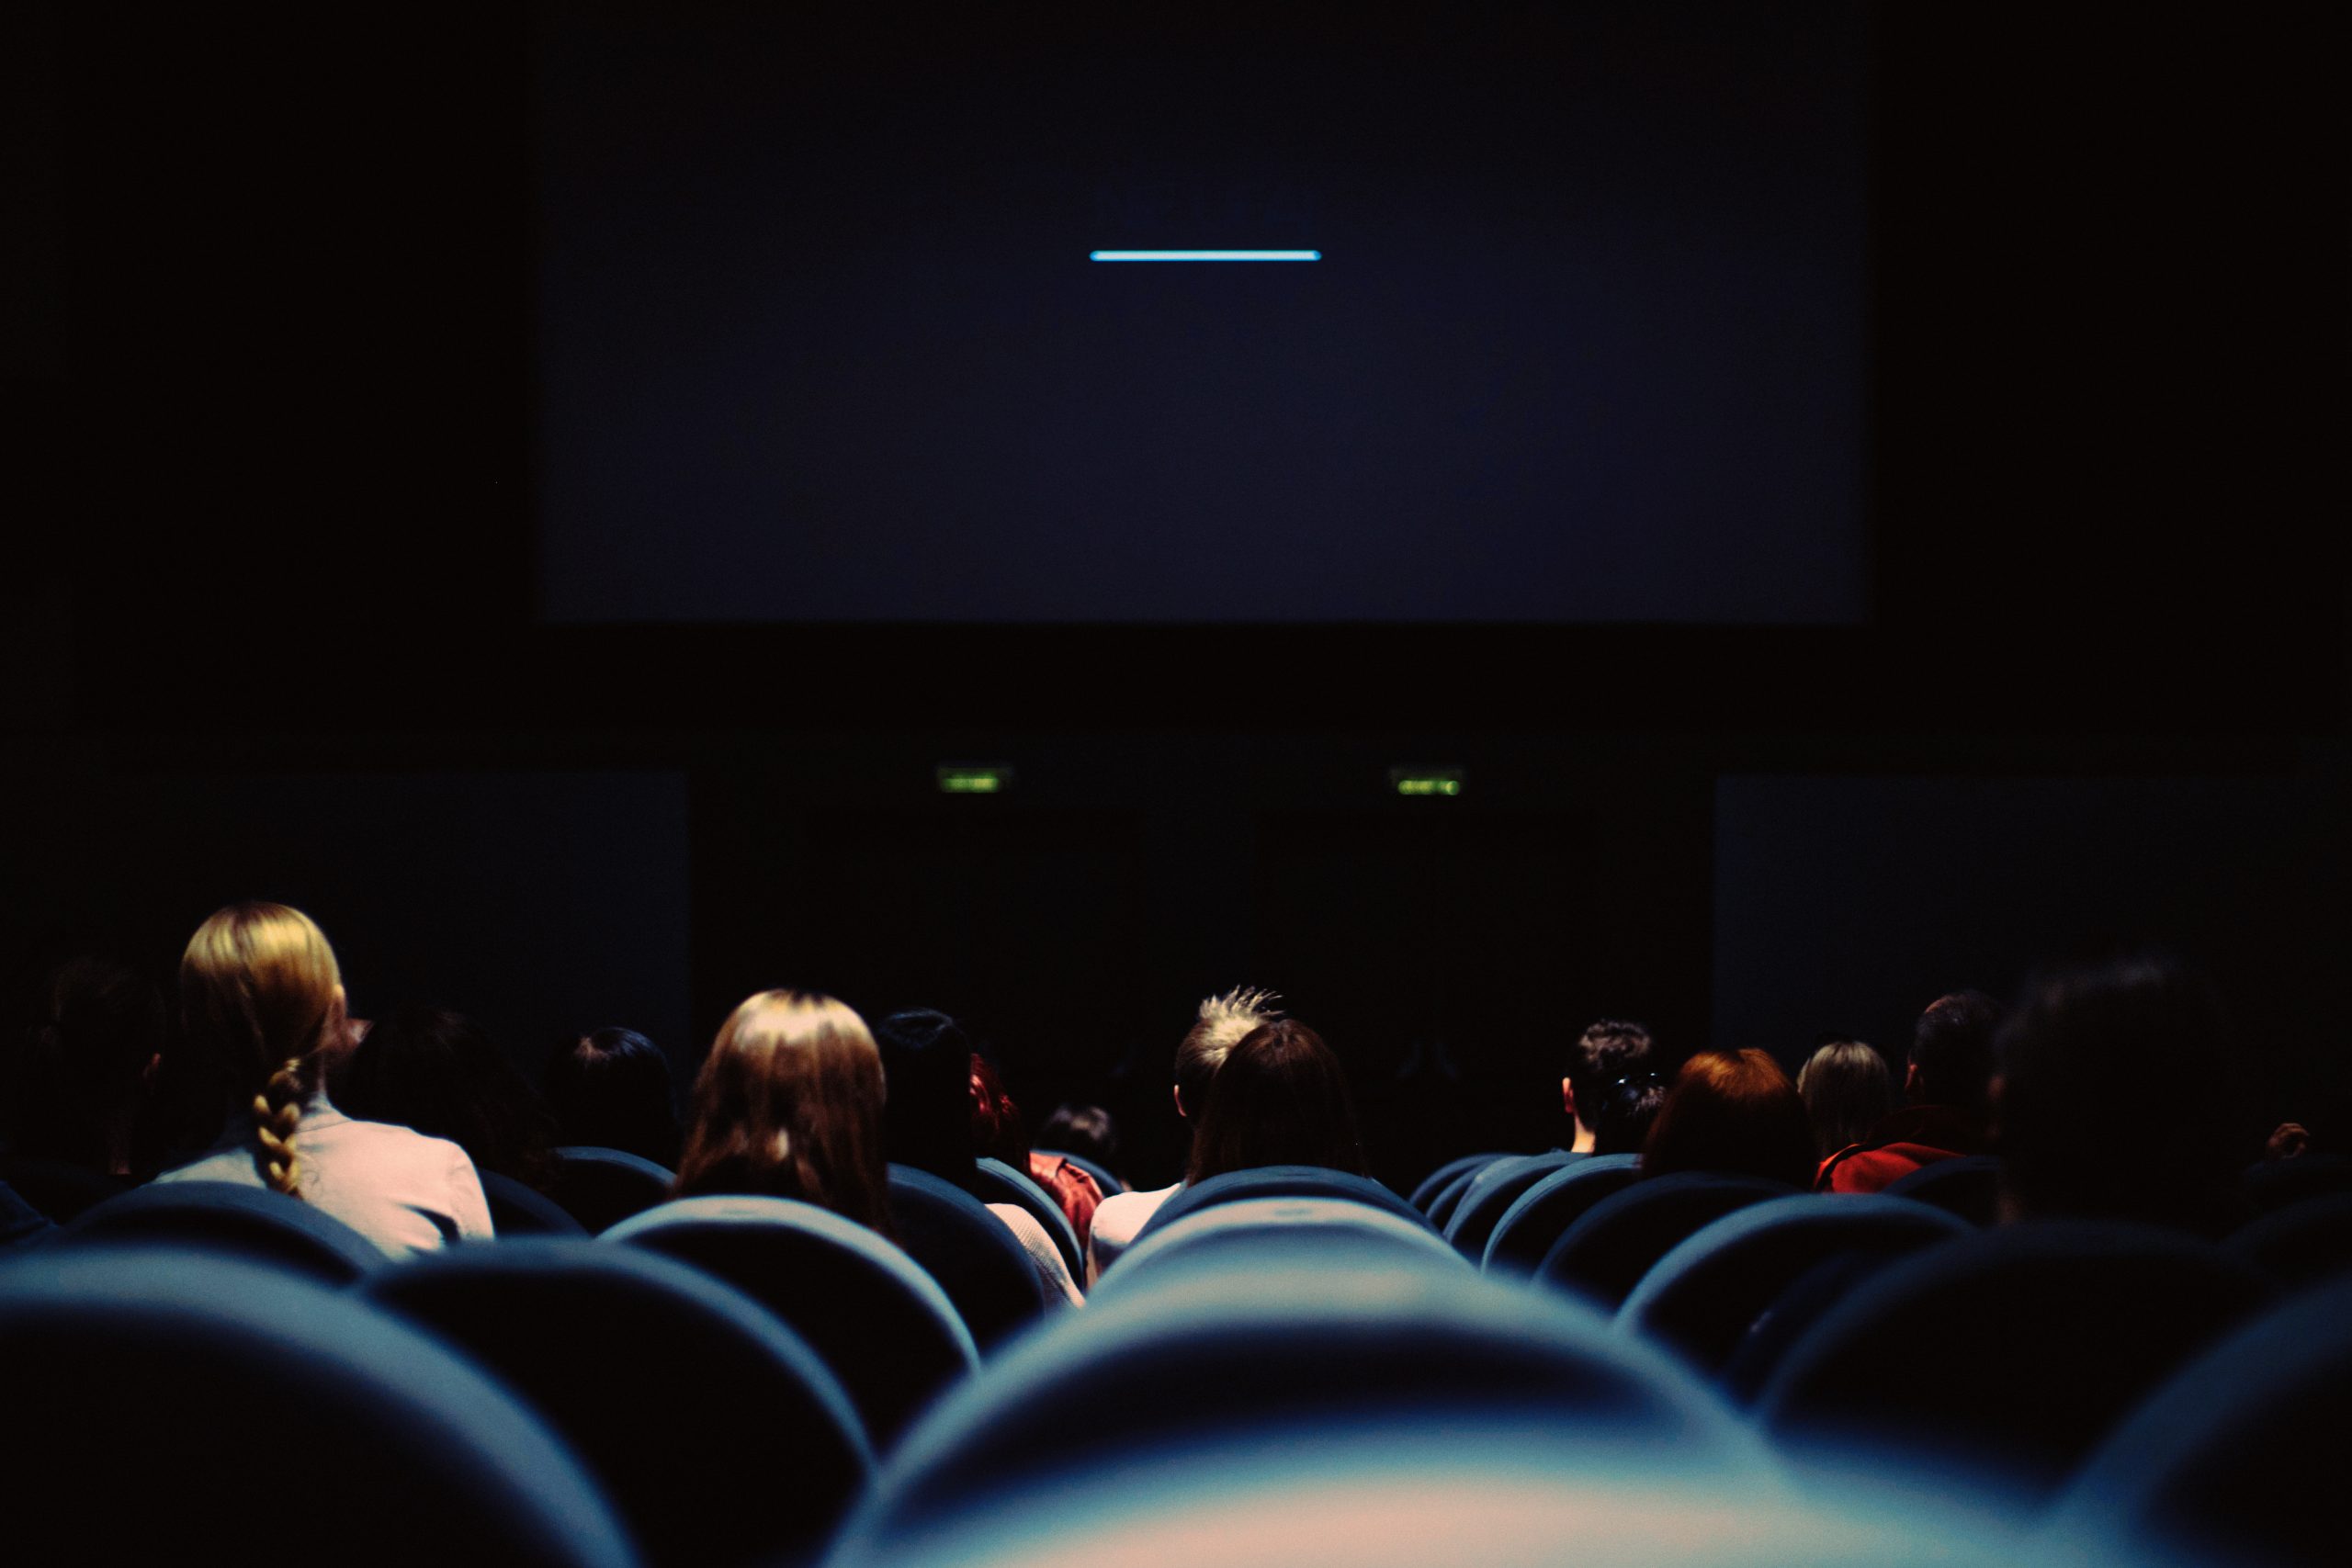 Cinema Screen